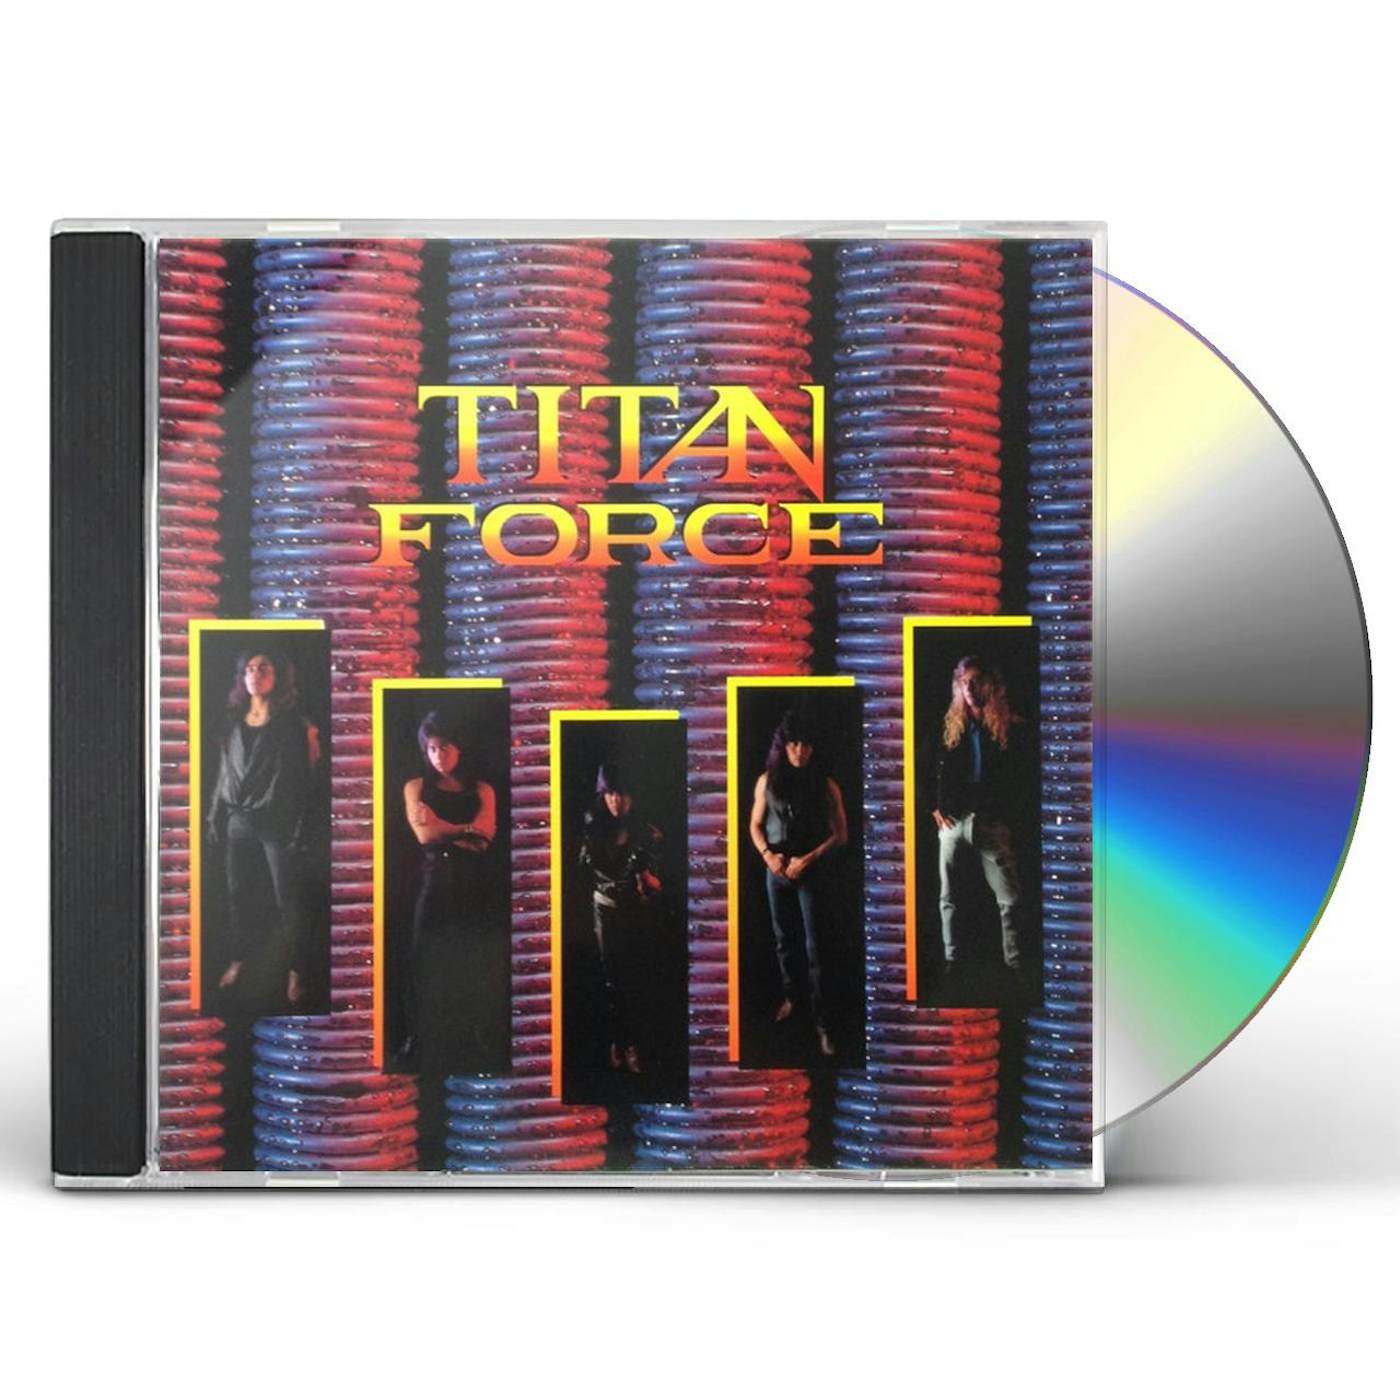 Titan Force CD